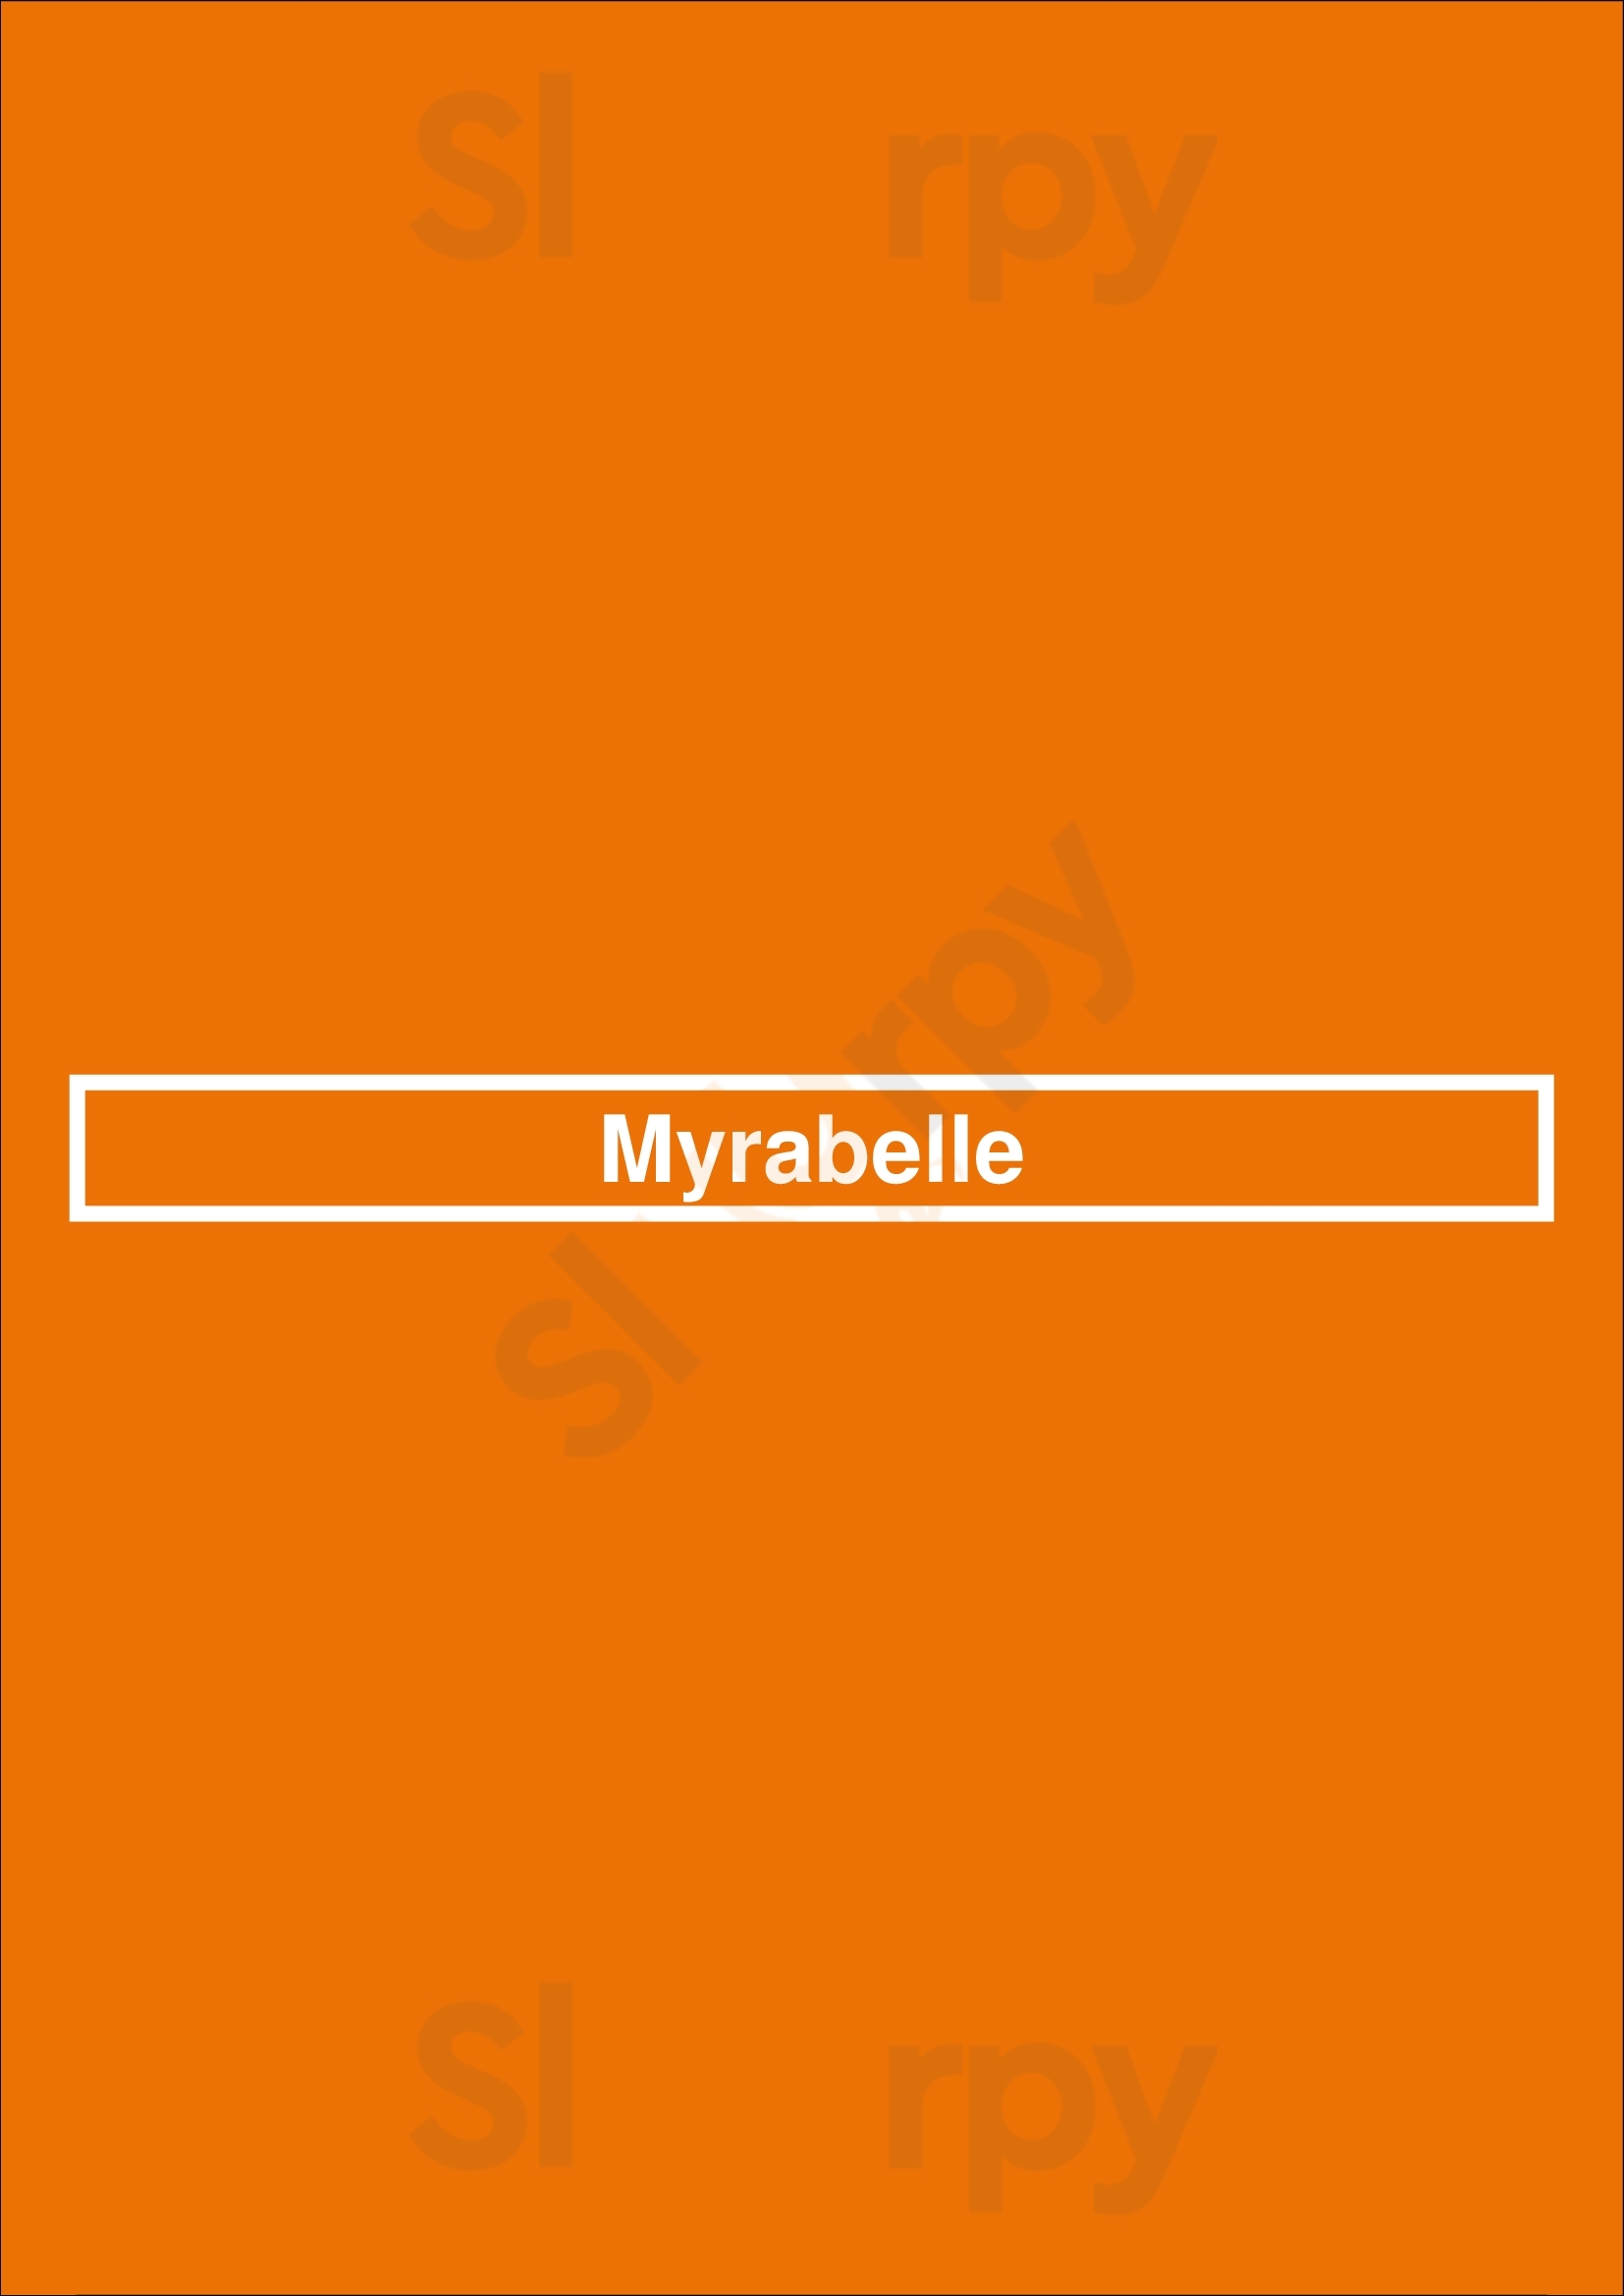 Myrabelle Amsterdam Menu - 1